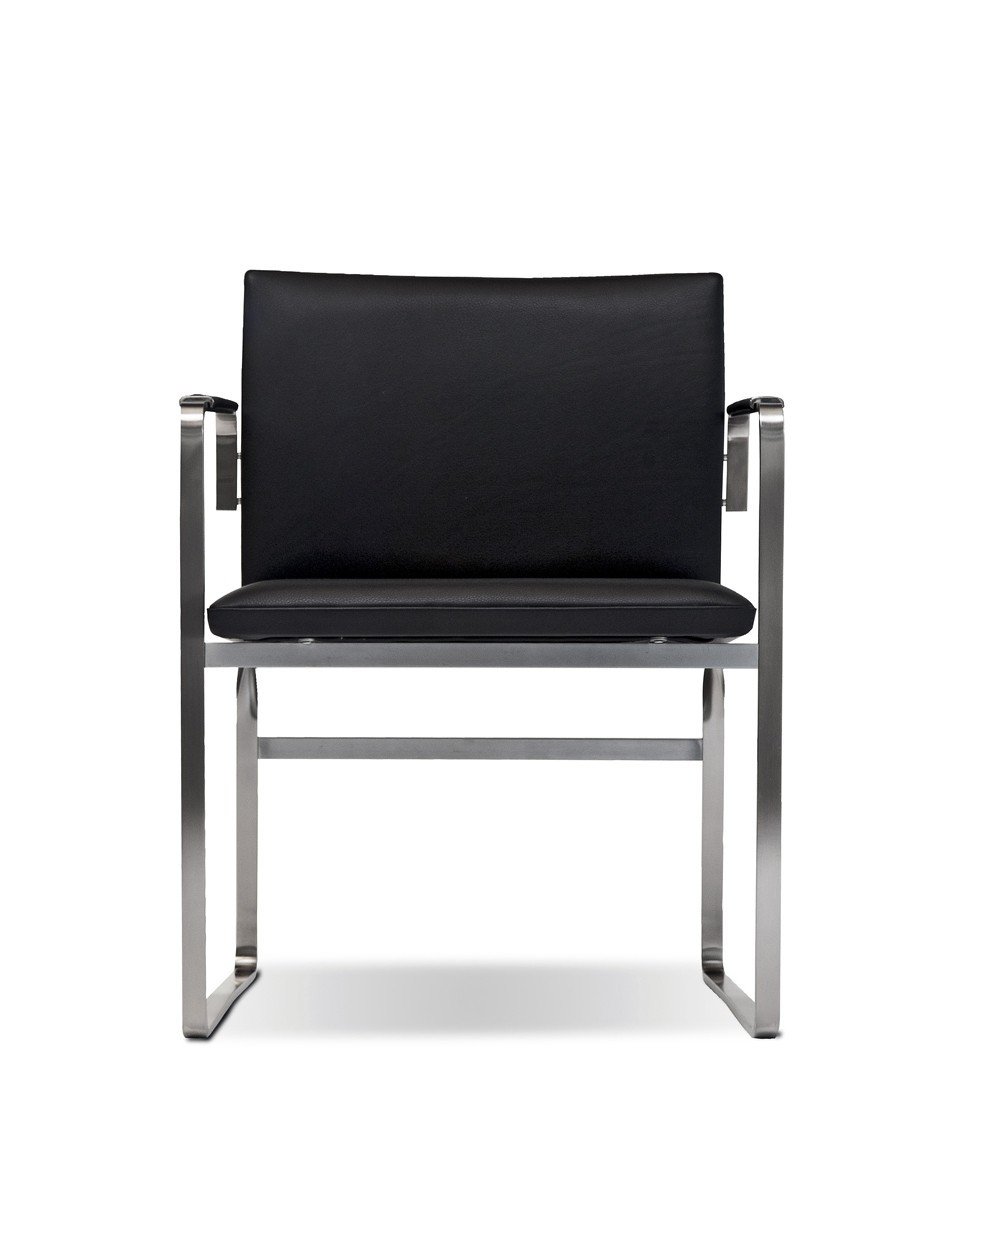 Arcadia chair CH111, Hans J. Wegner design